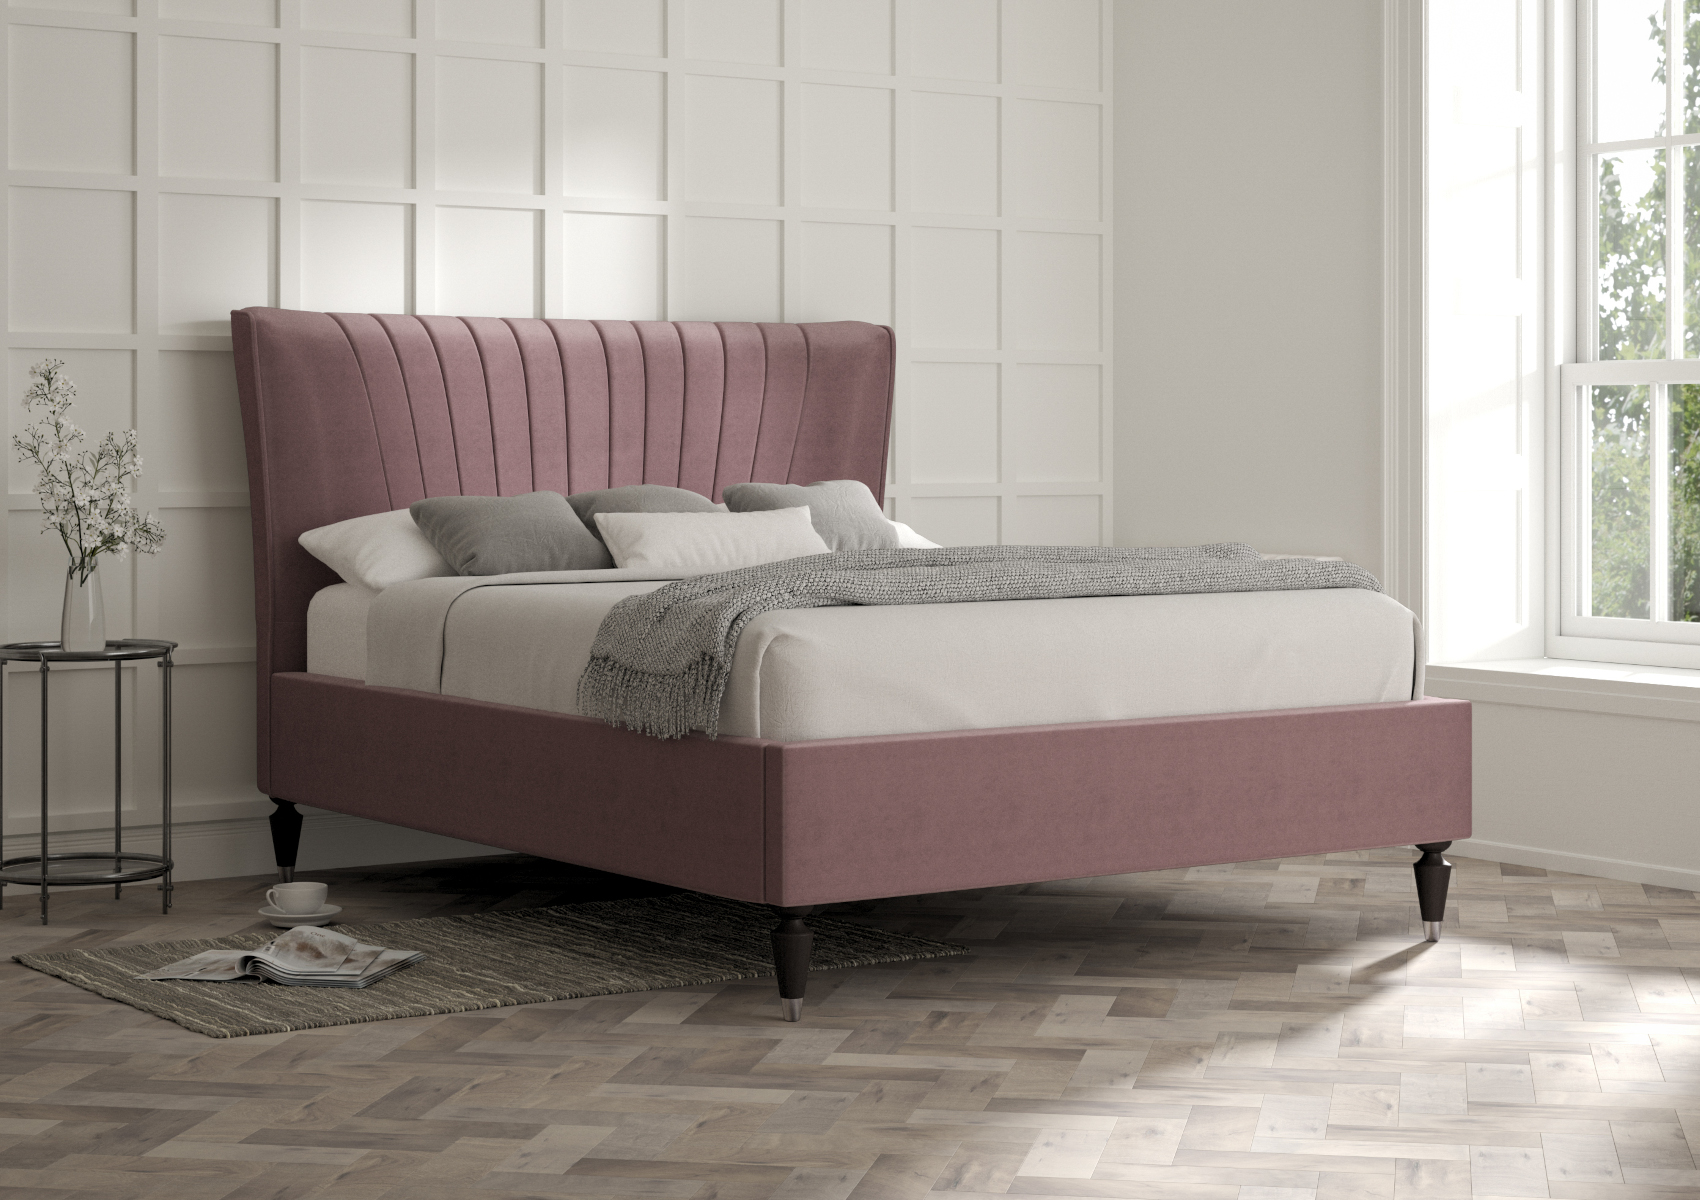 View Melbury Savannah Mocha Upholstered Single Bed Time4Sleep information